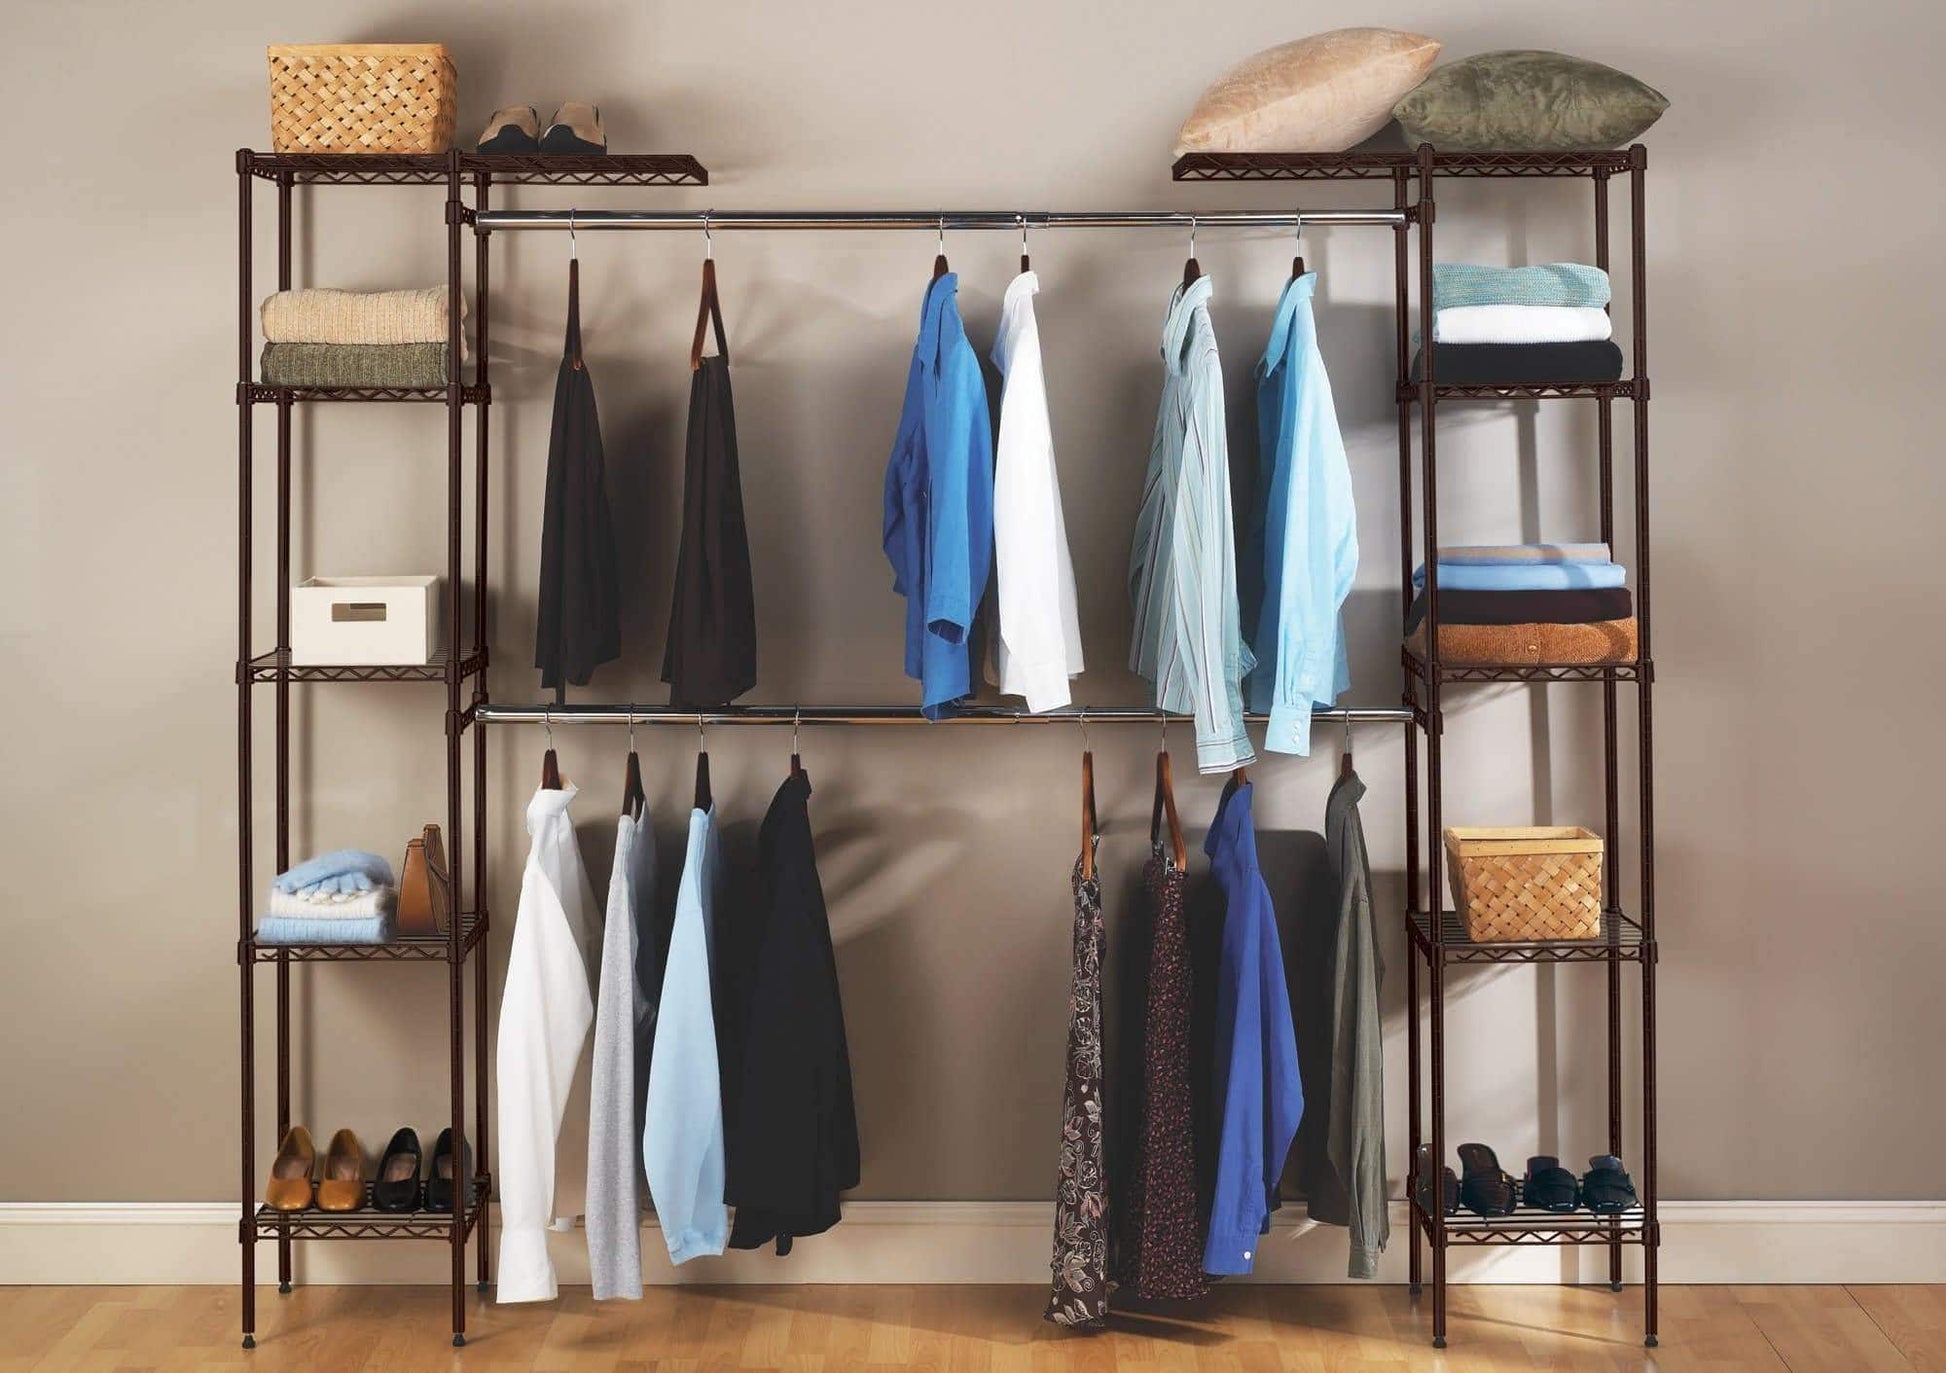 Try seville classics double rod expandable clothes rack closet organizer system 58 to 83 w x 14 d x 72 satin bronze